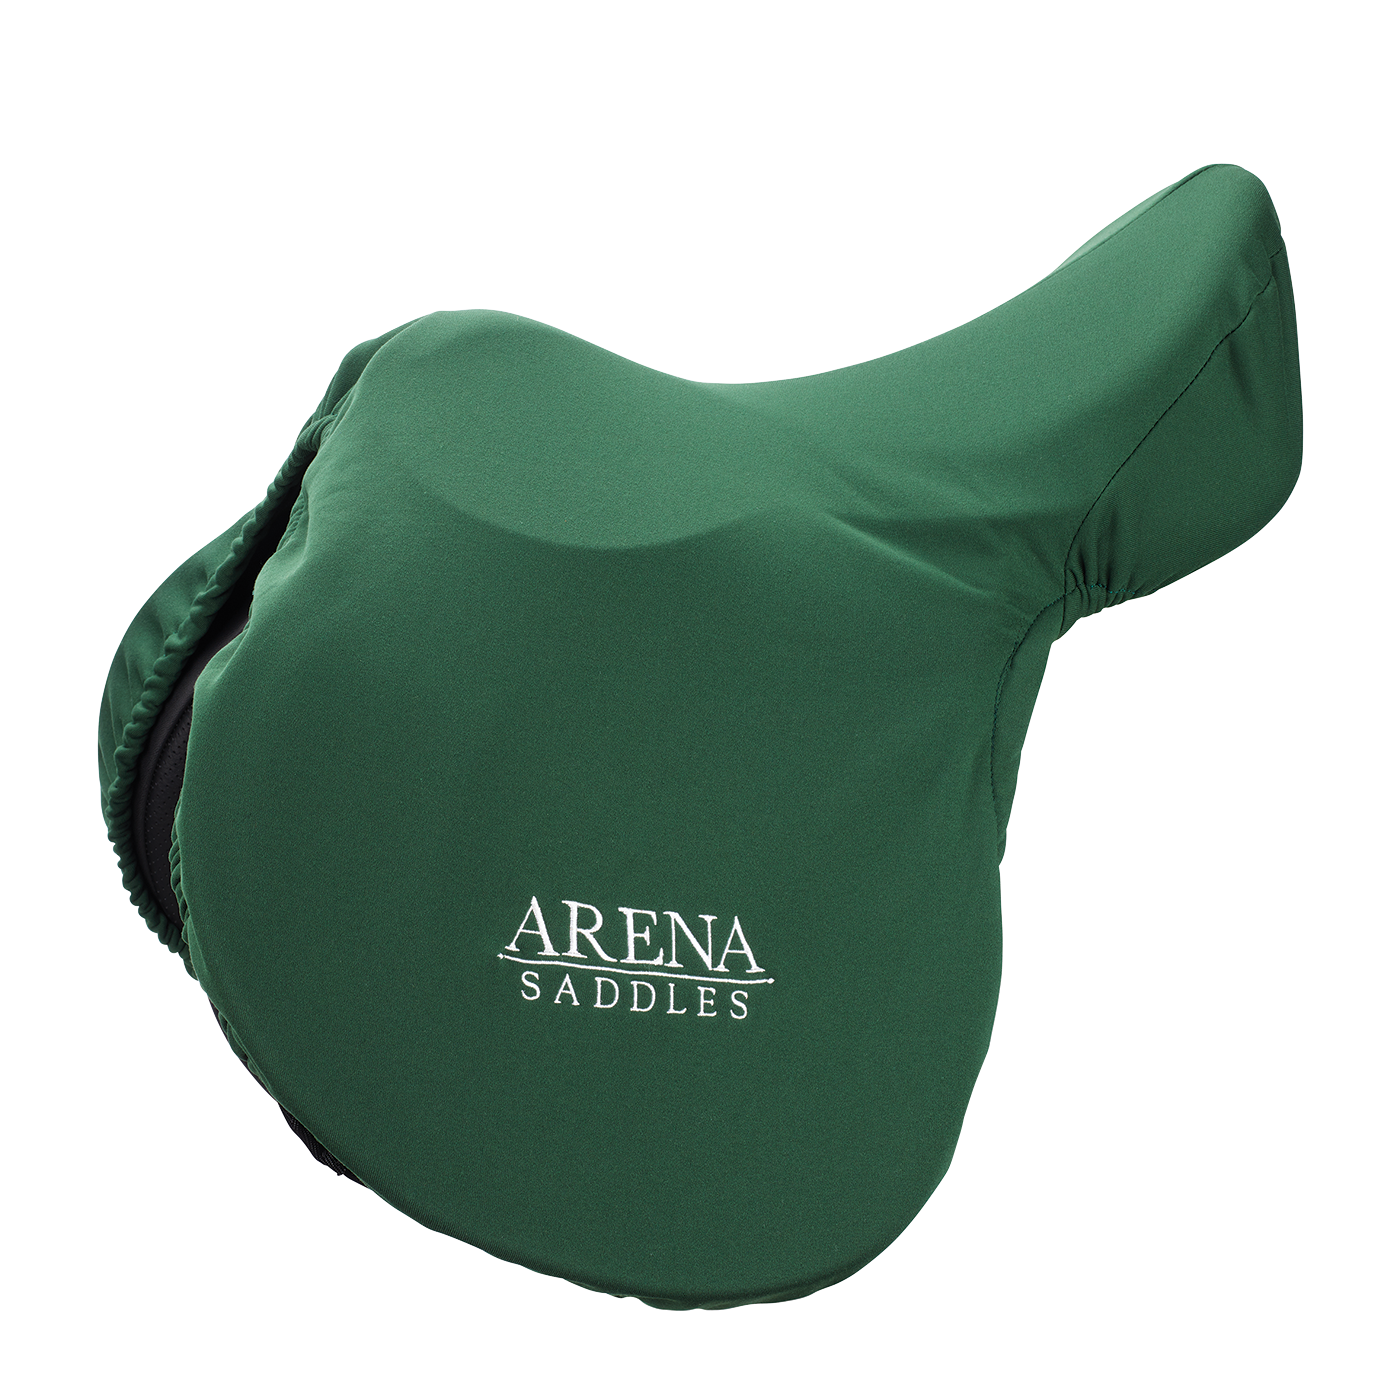 Arena Saddle Cover - 735:40611509338146